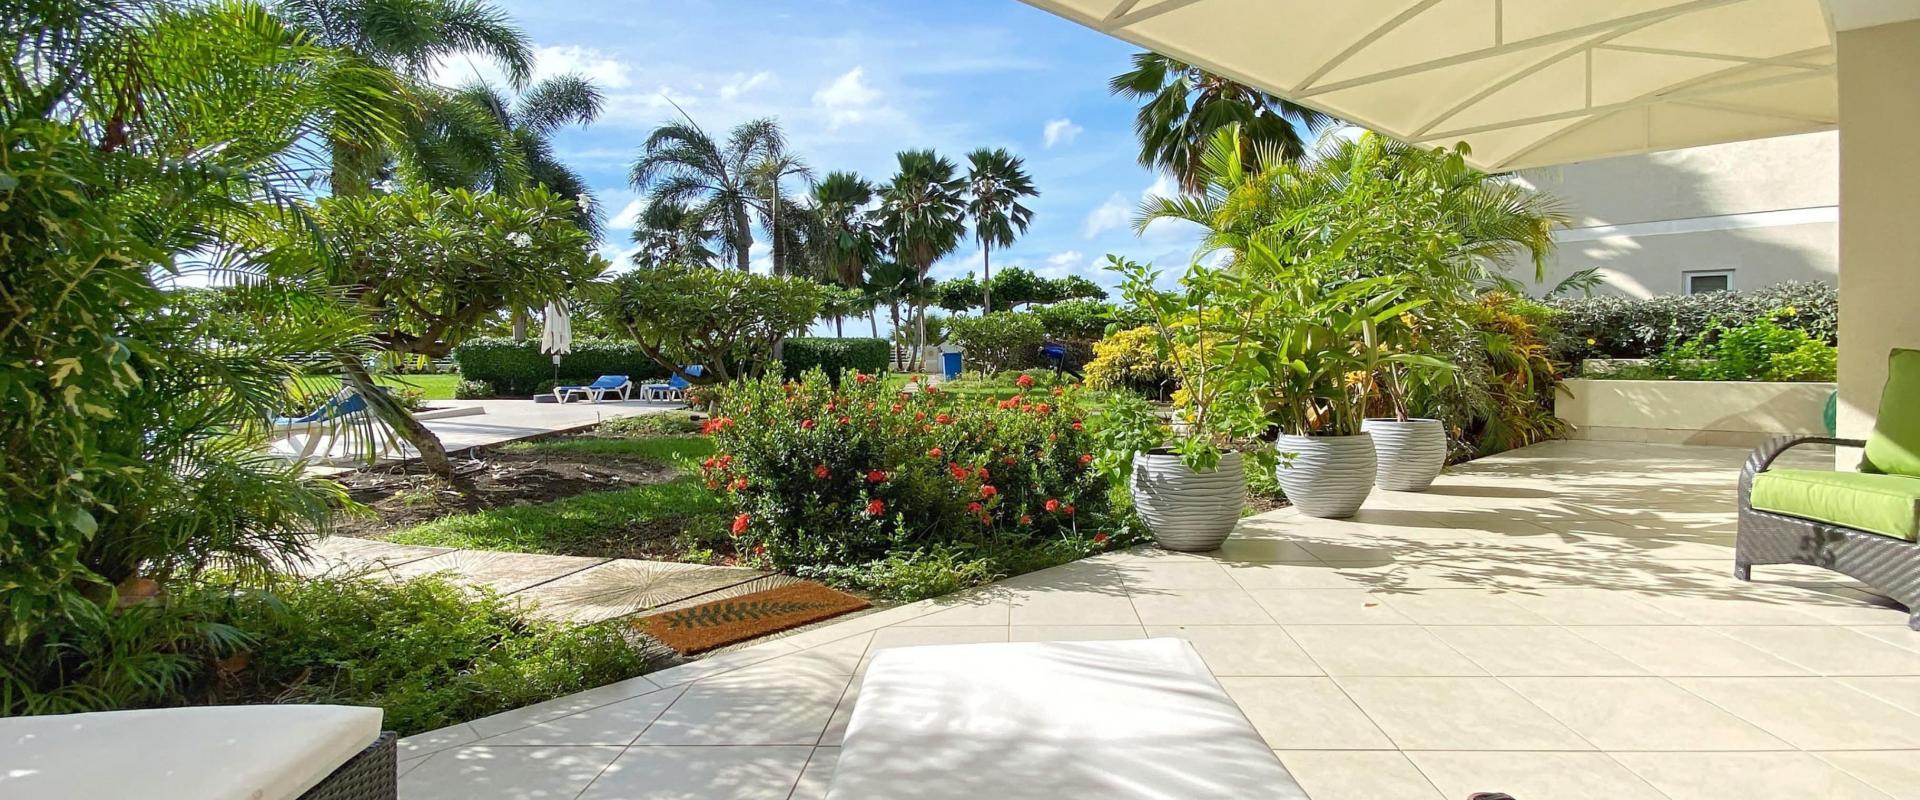 Palm Beach 211 Barbados Beachfront Vacation Condo Rental Lounge Chairs